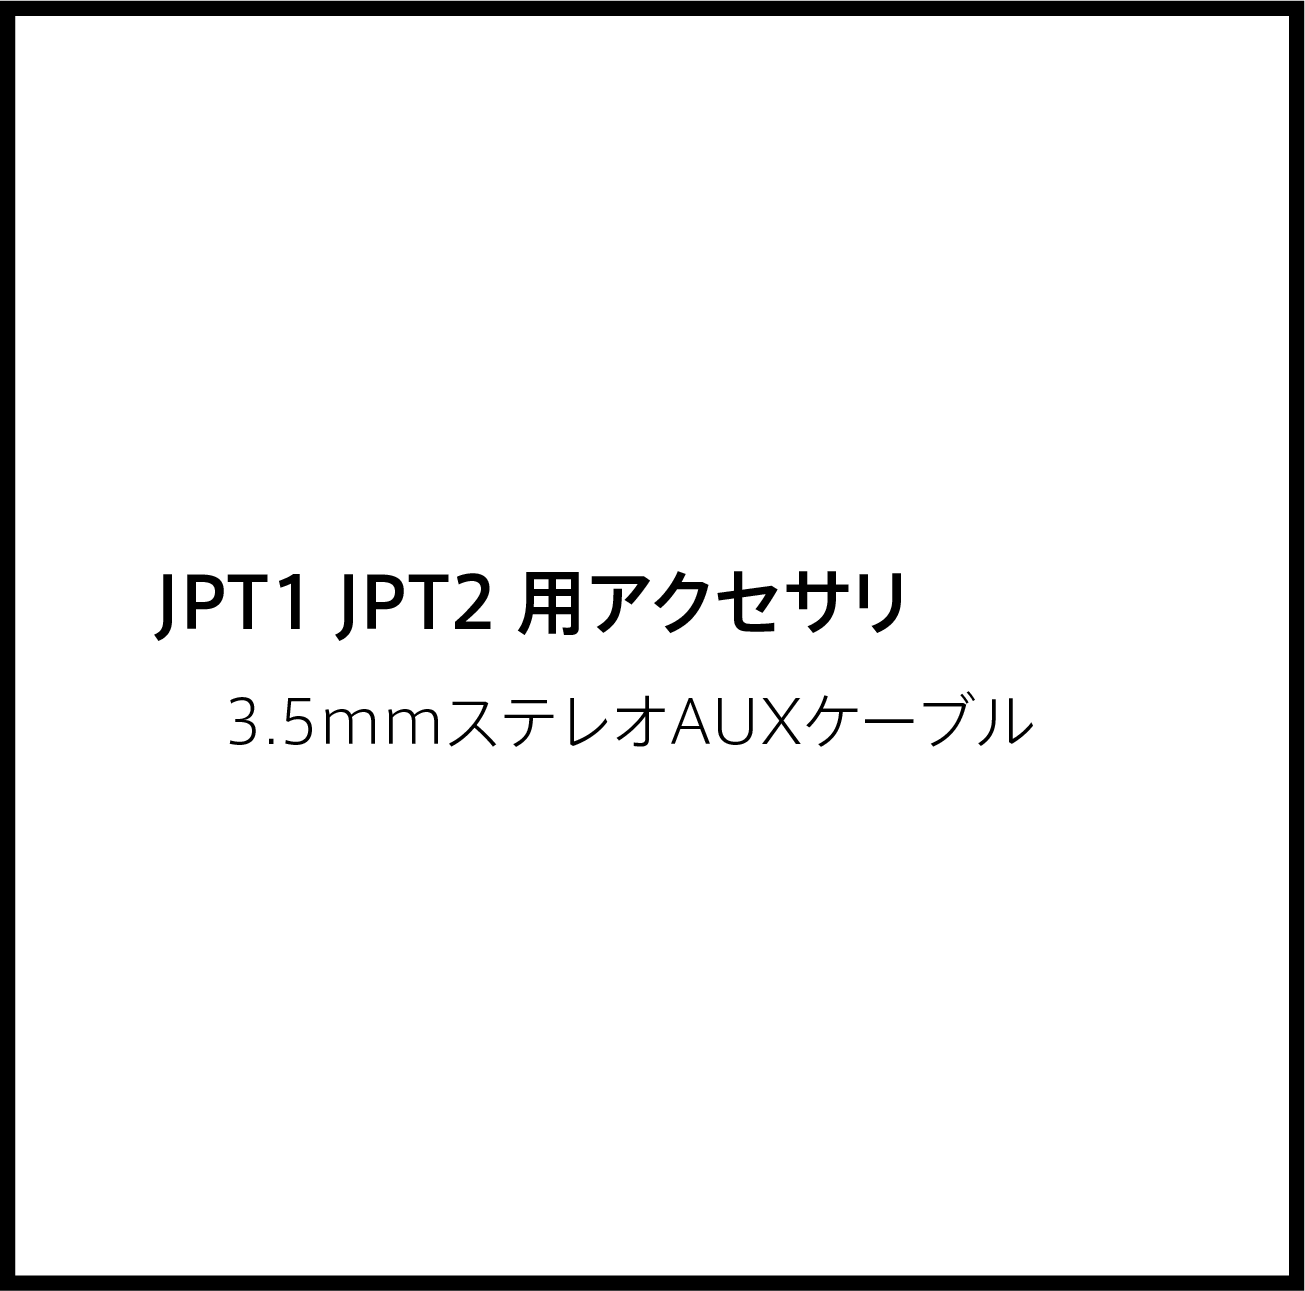 78%OFF!】 JPRiDE JPT2 Bluetooth トランスミッター レシーバー